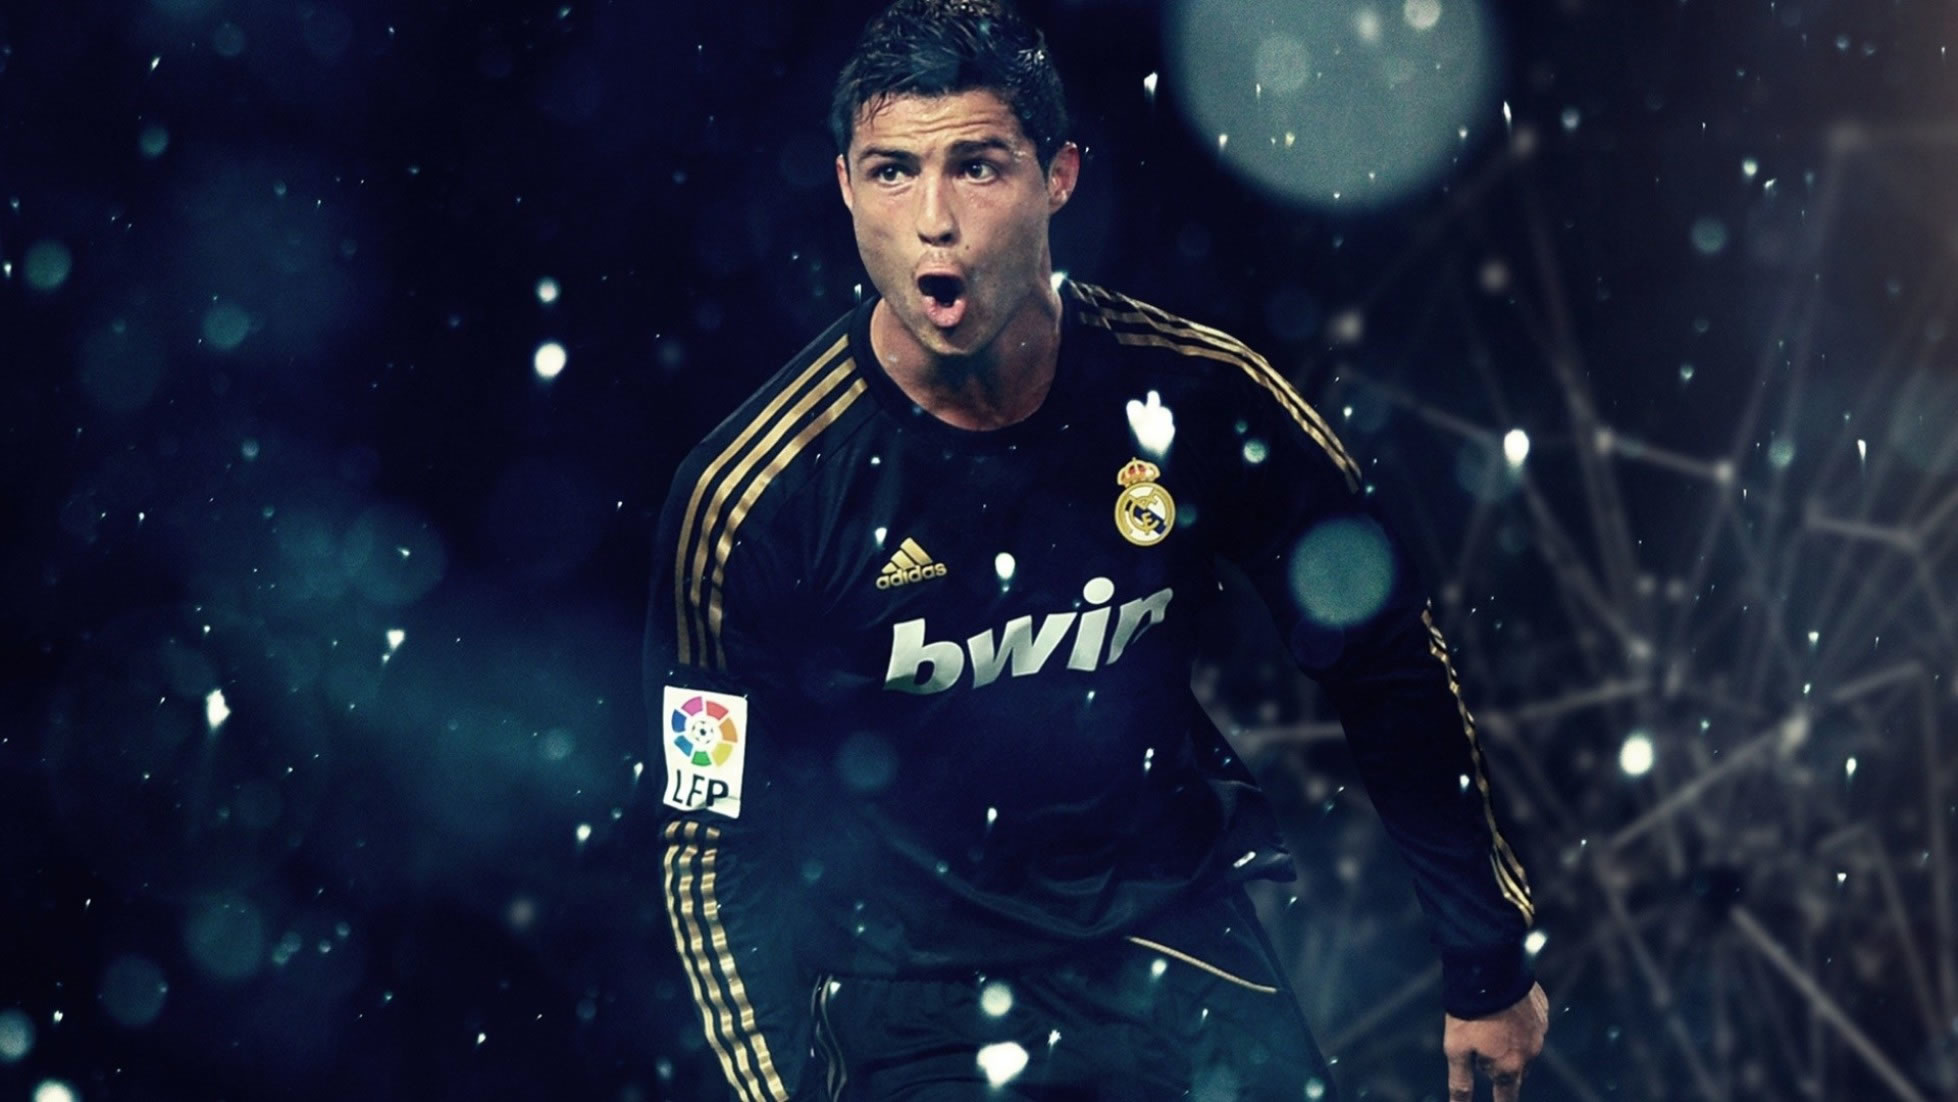 1958x1102 Cristiano Ronaldo Real Madrid screaming wallpaper